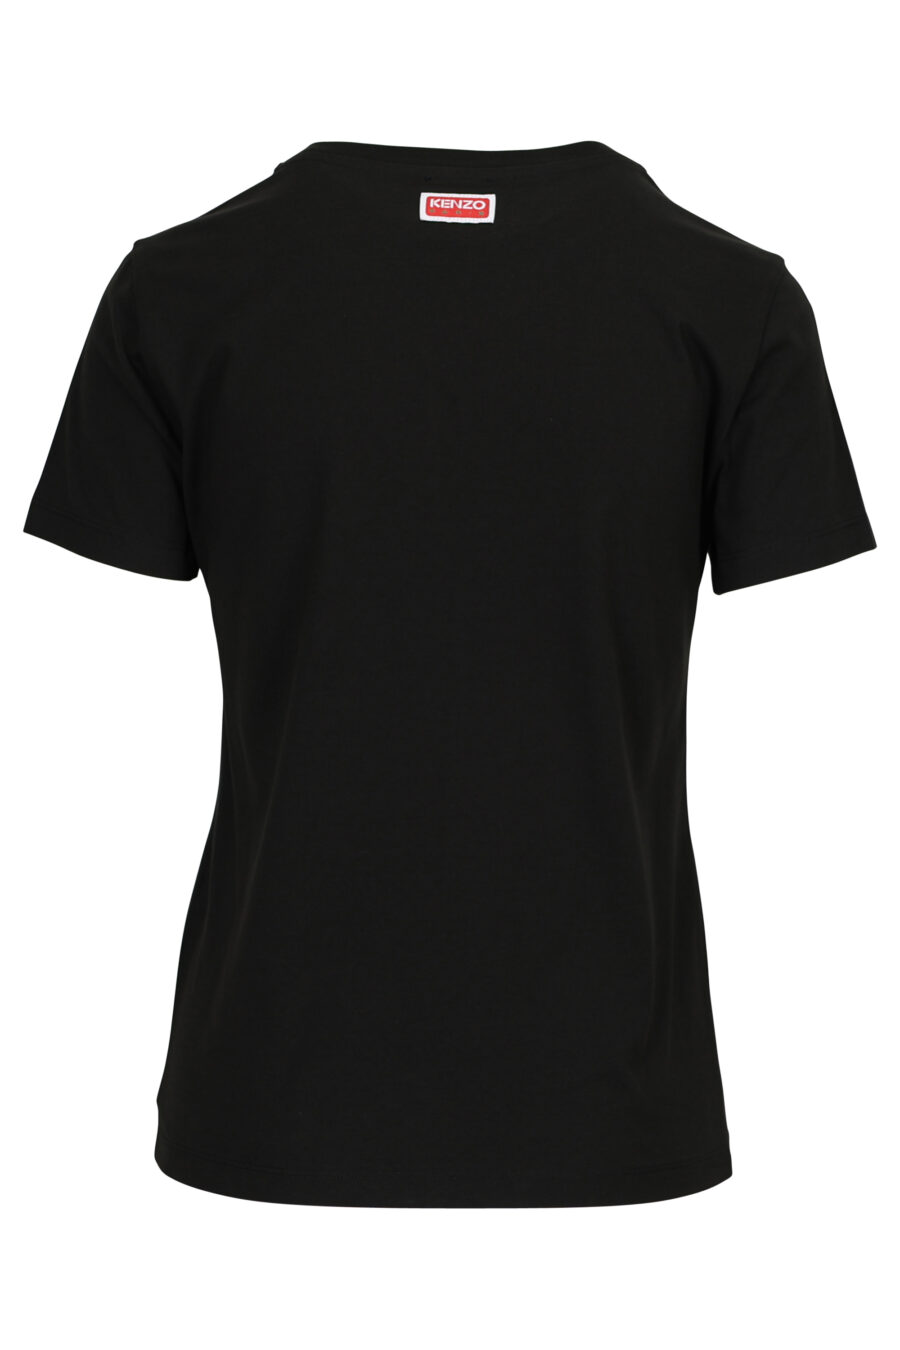 Camiseta negra con minilogo "tiger" - 3612230552319 1